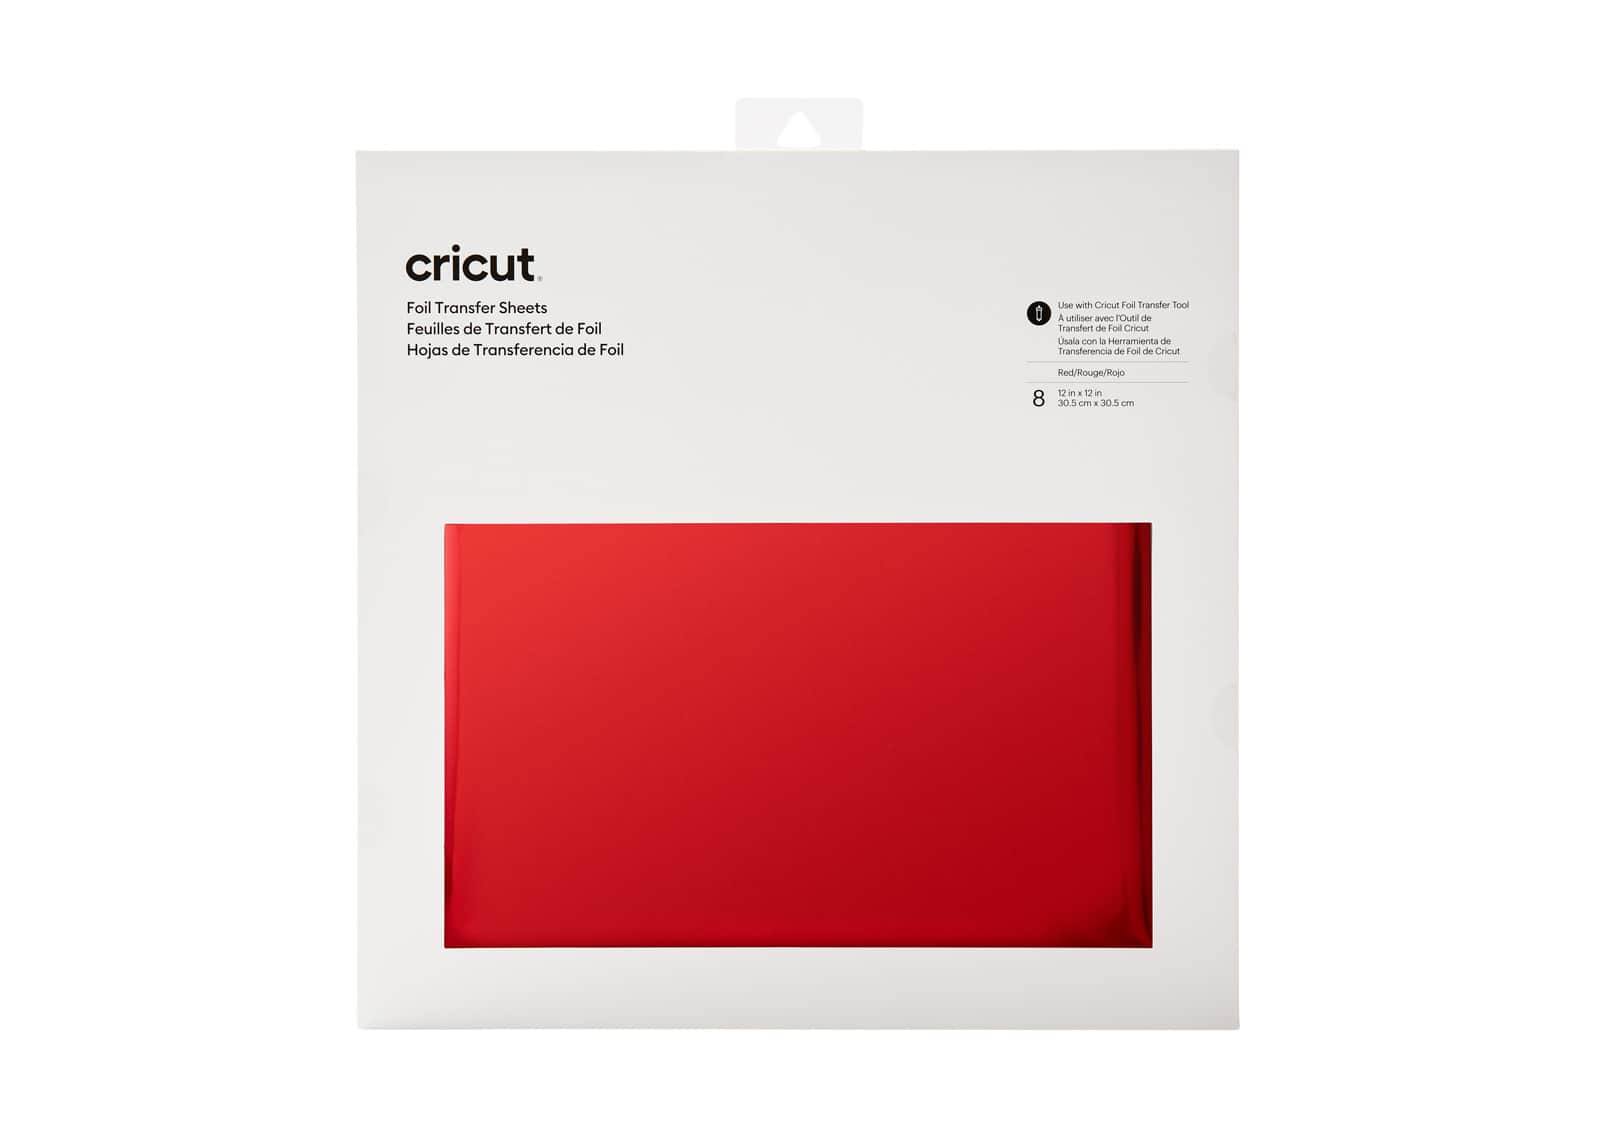 Cricut Foil Transfer Tool Project